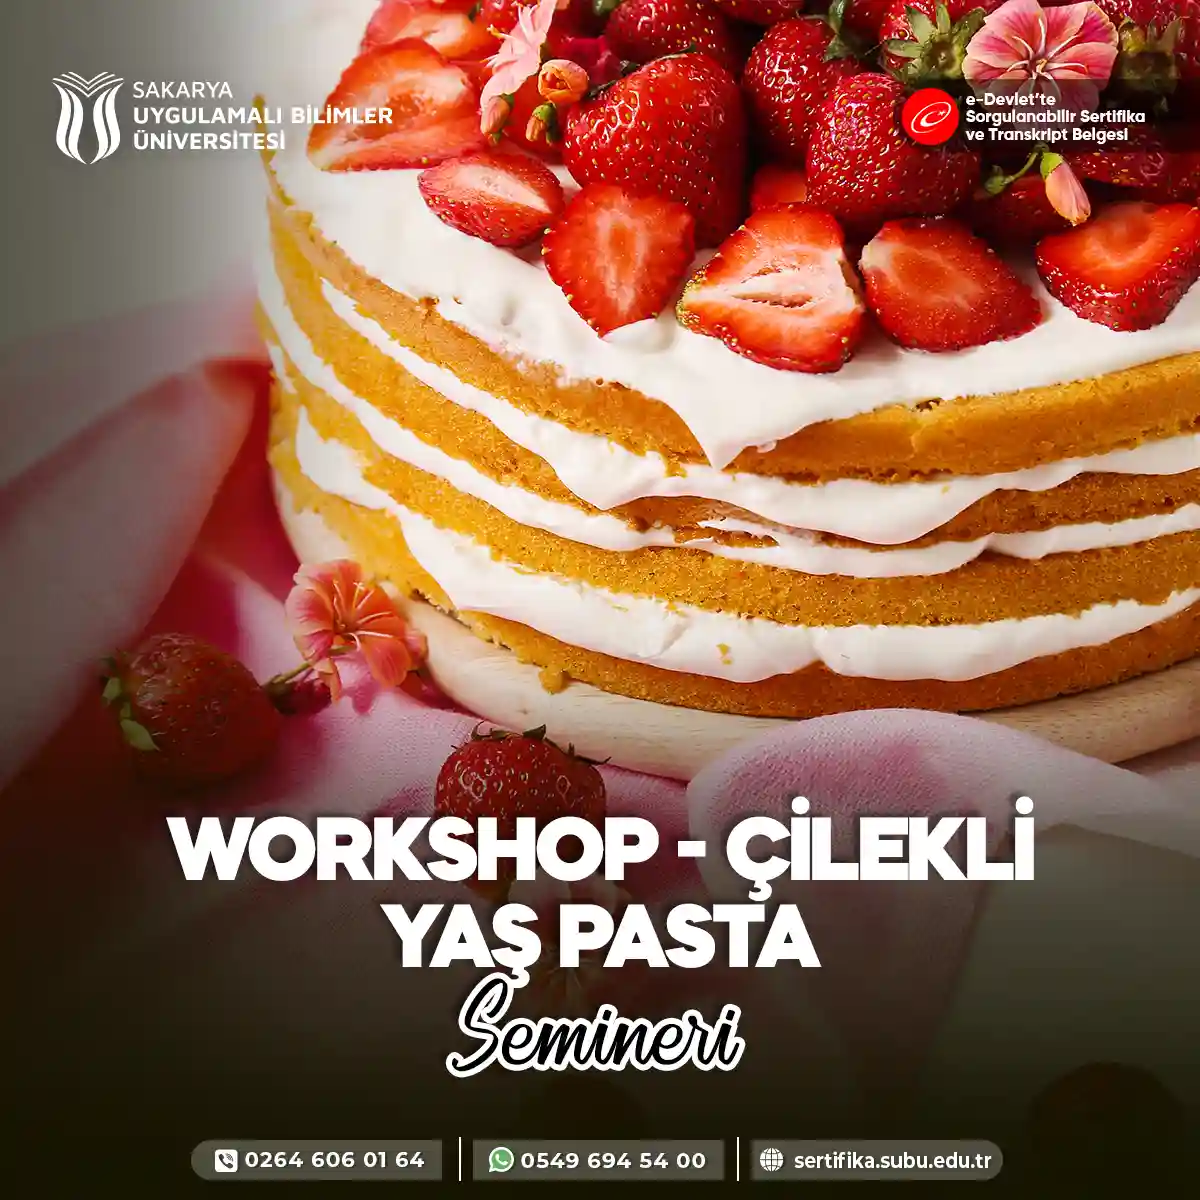 Workshop - Çilekli Yaş Pasta Semineri